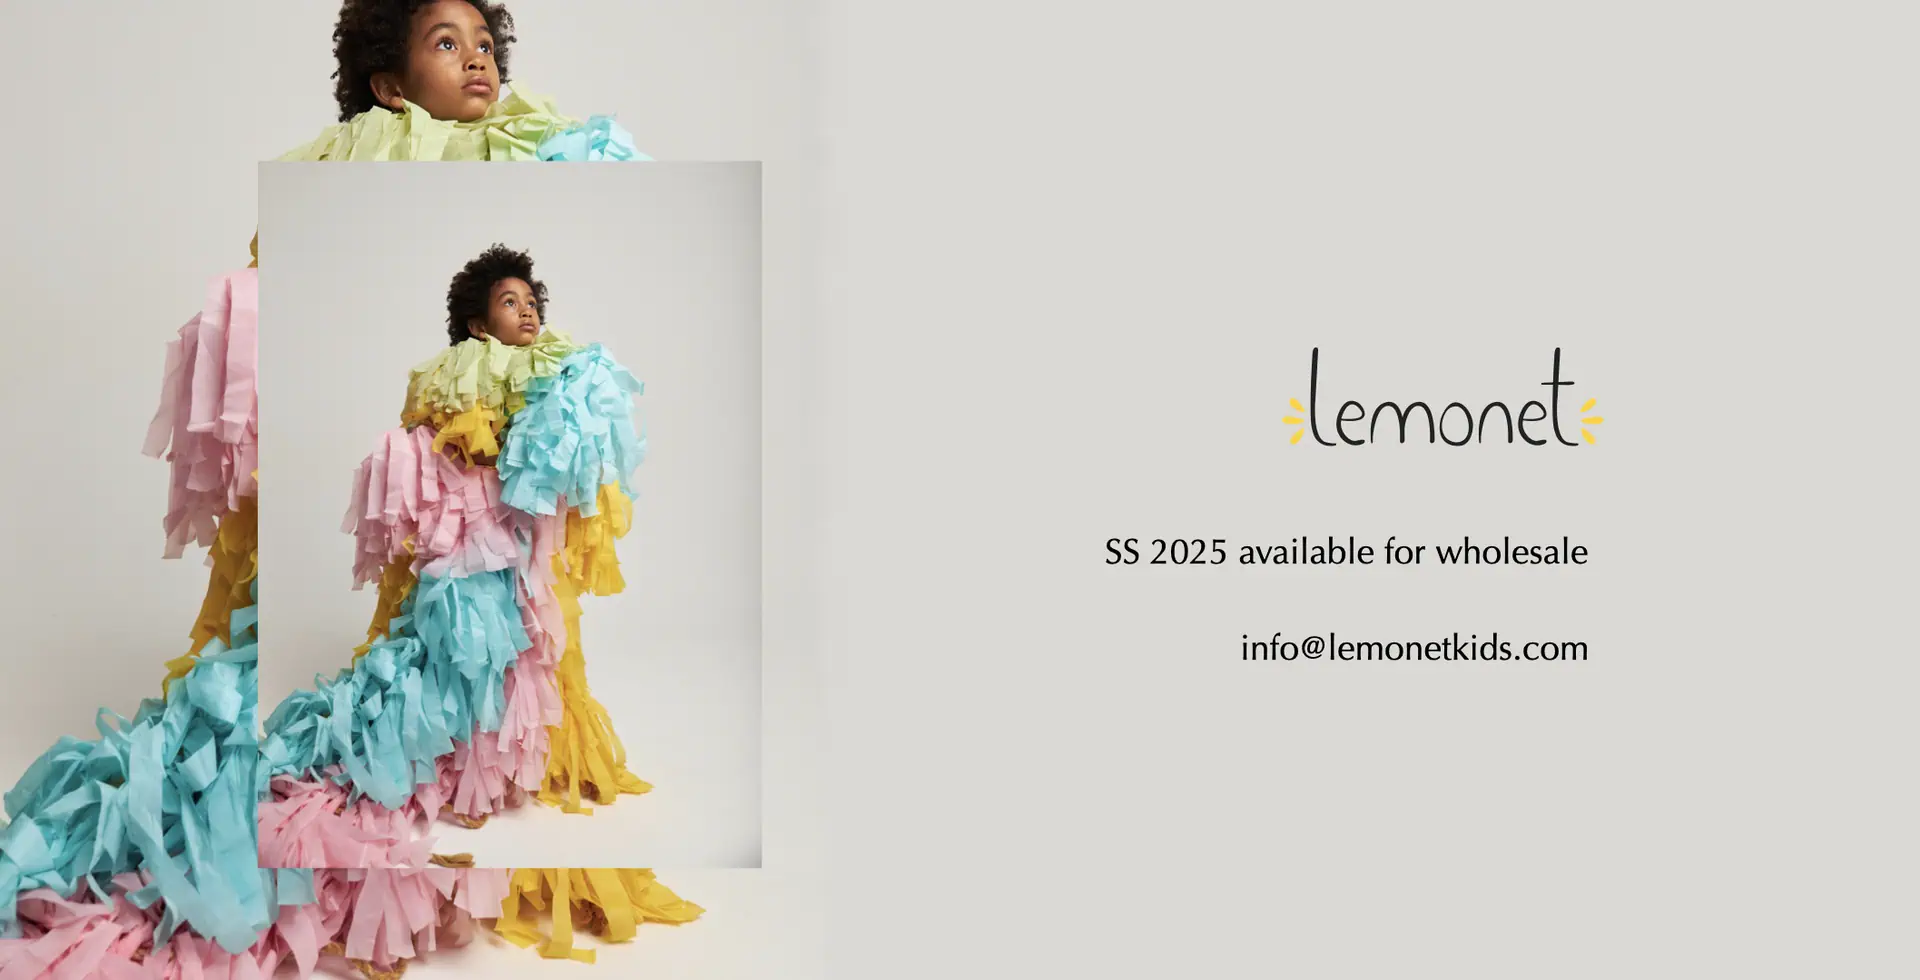 Lemonet Kids - Contact us